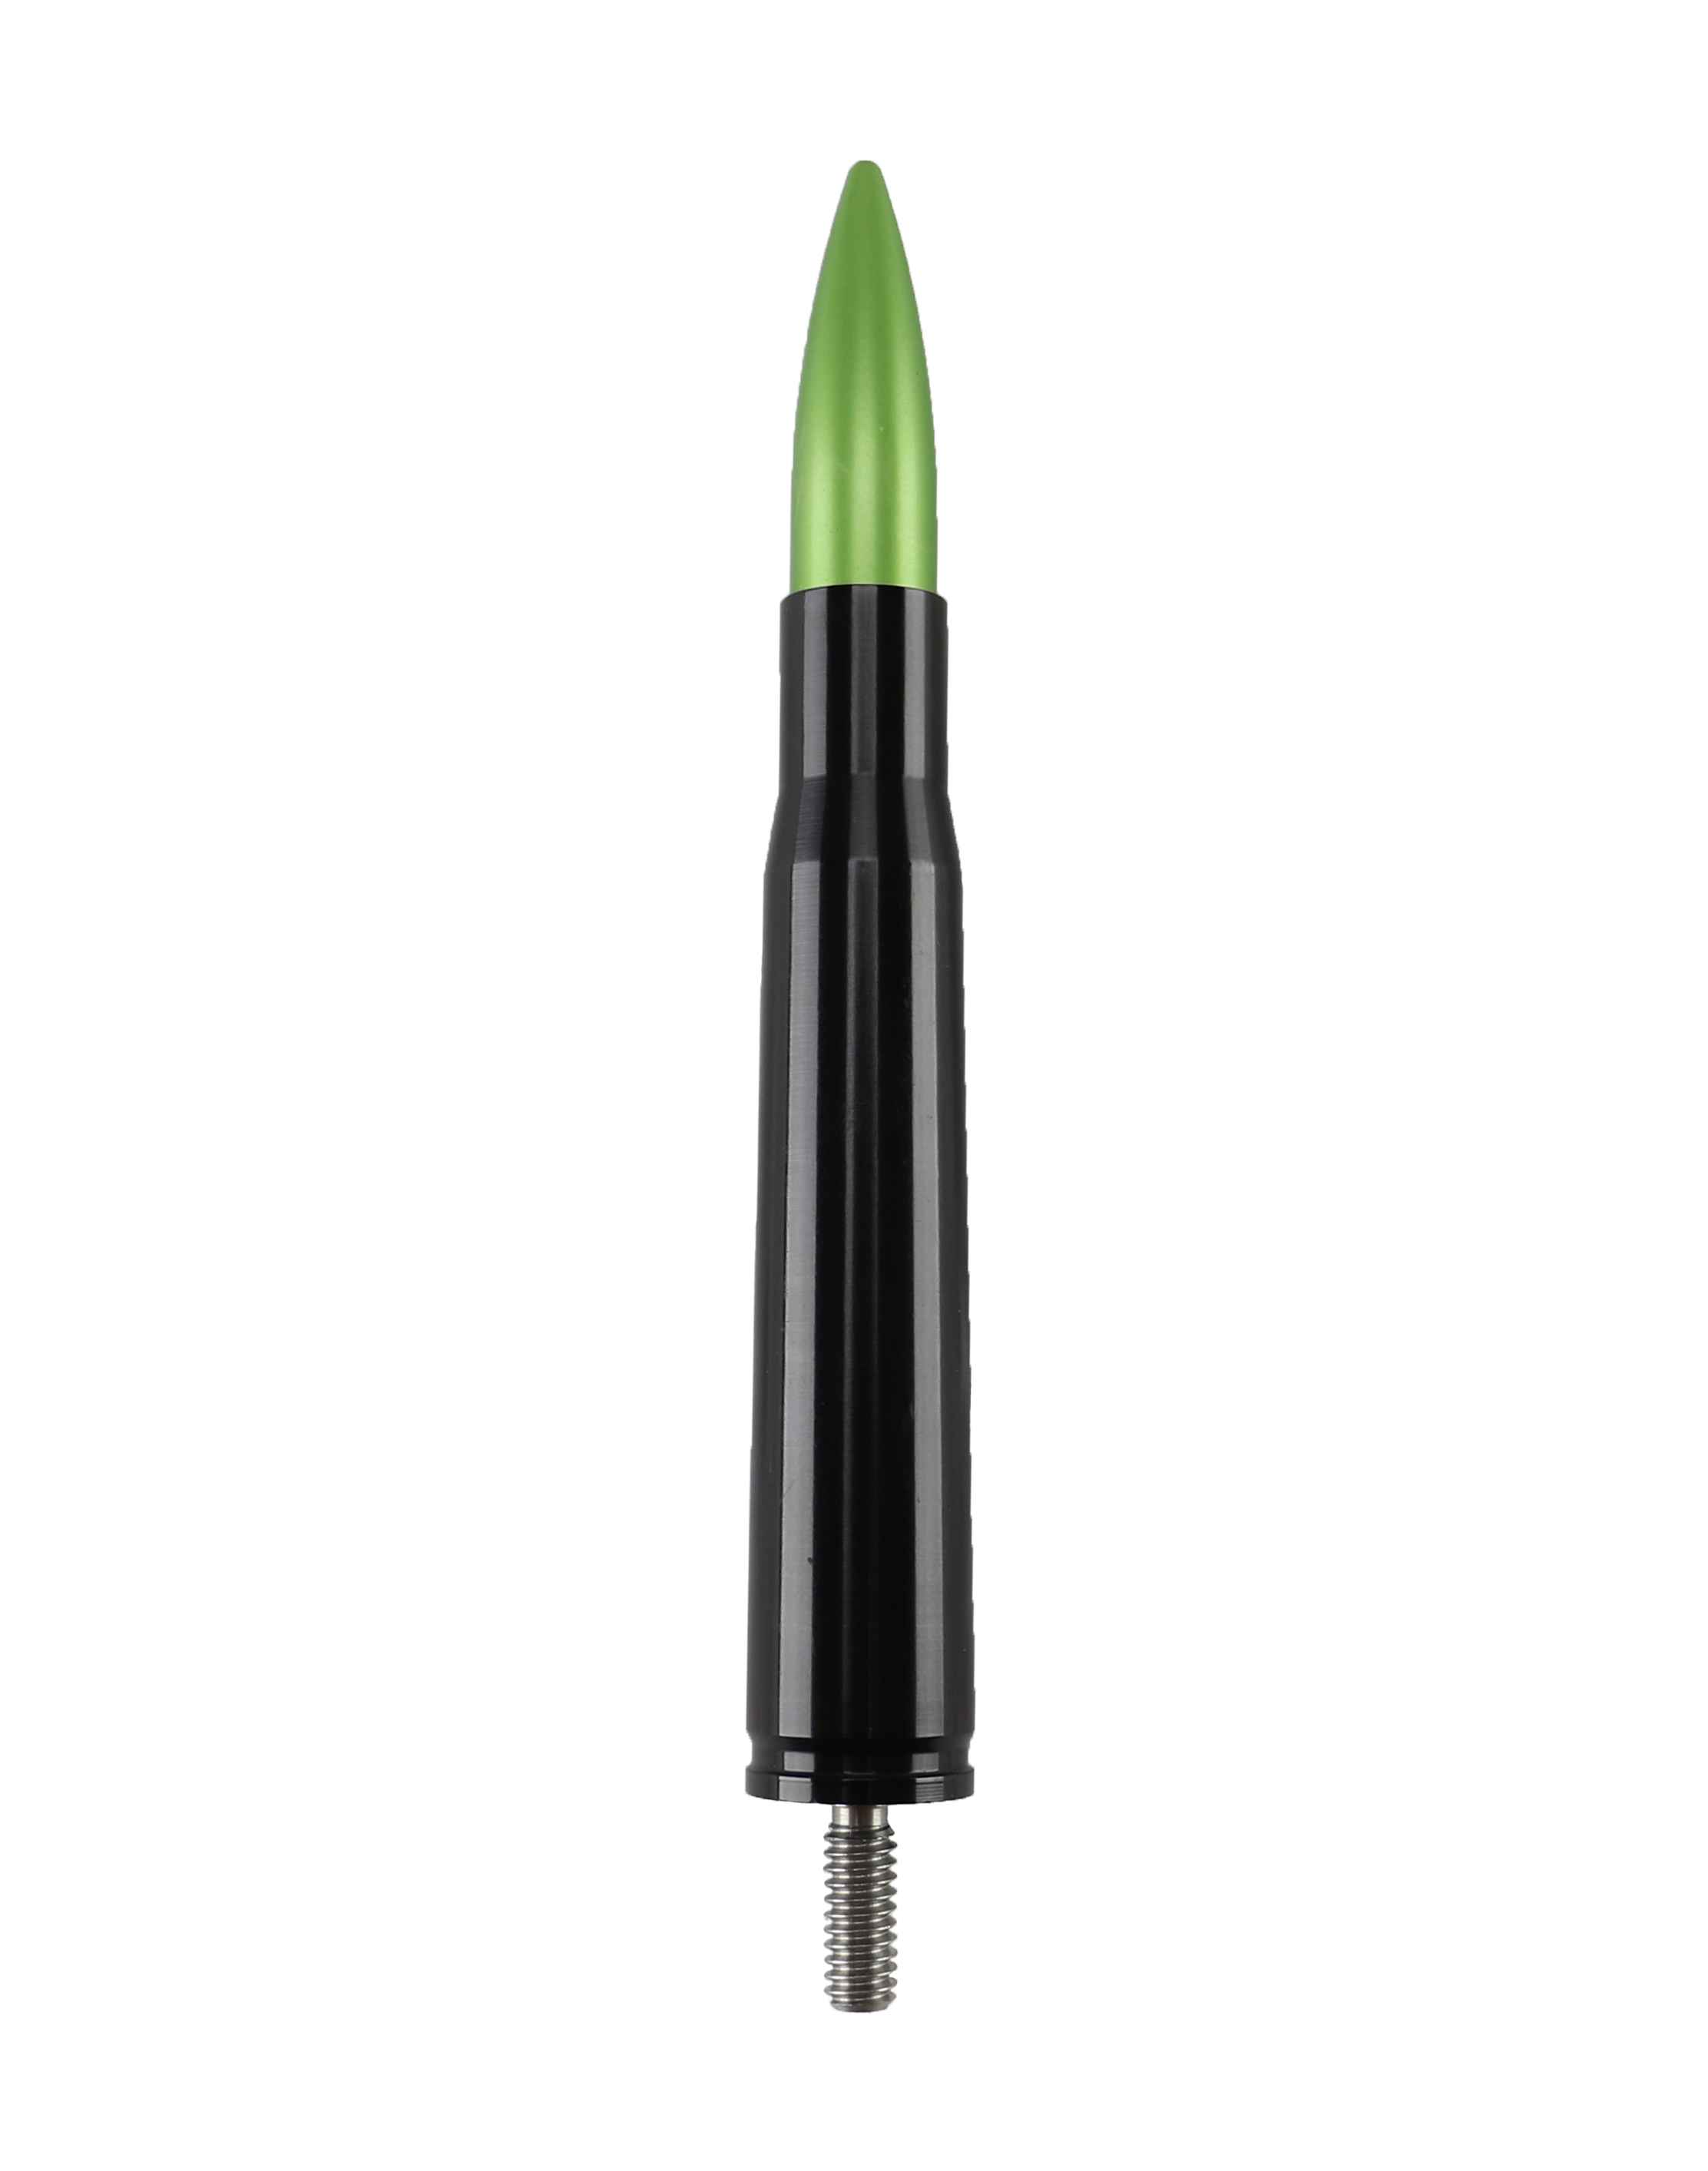 Votex - Made in USA - GREEN 50 Caliber Bullet Aluminum Antenna - Part Number A435-GREEN-FUBA